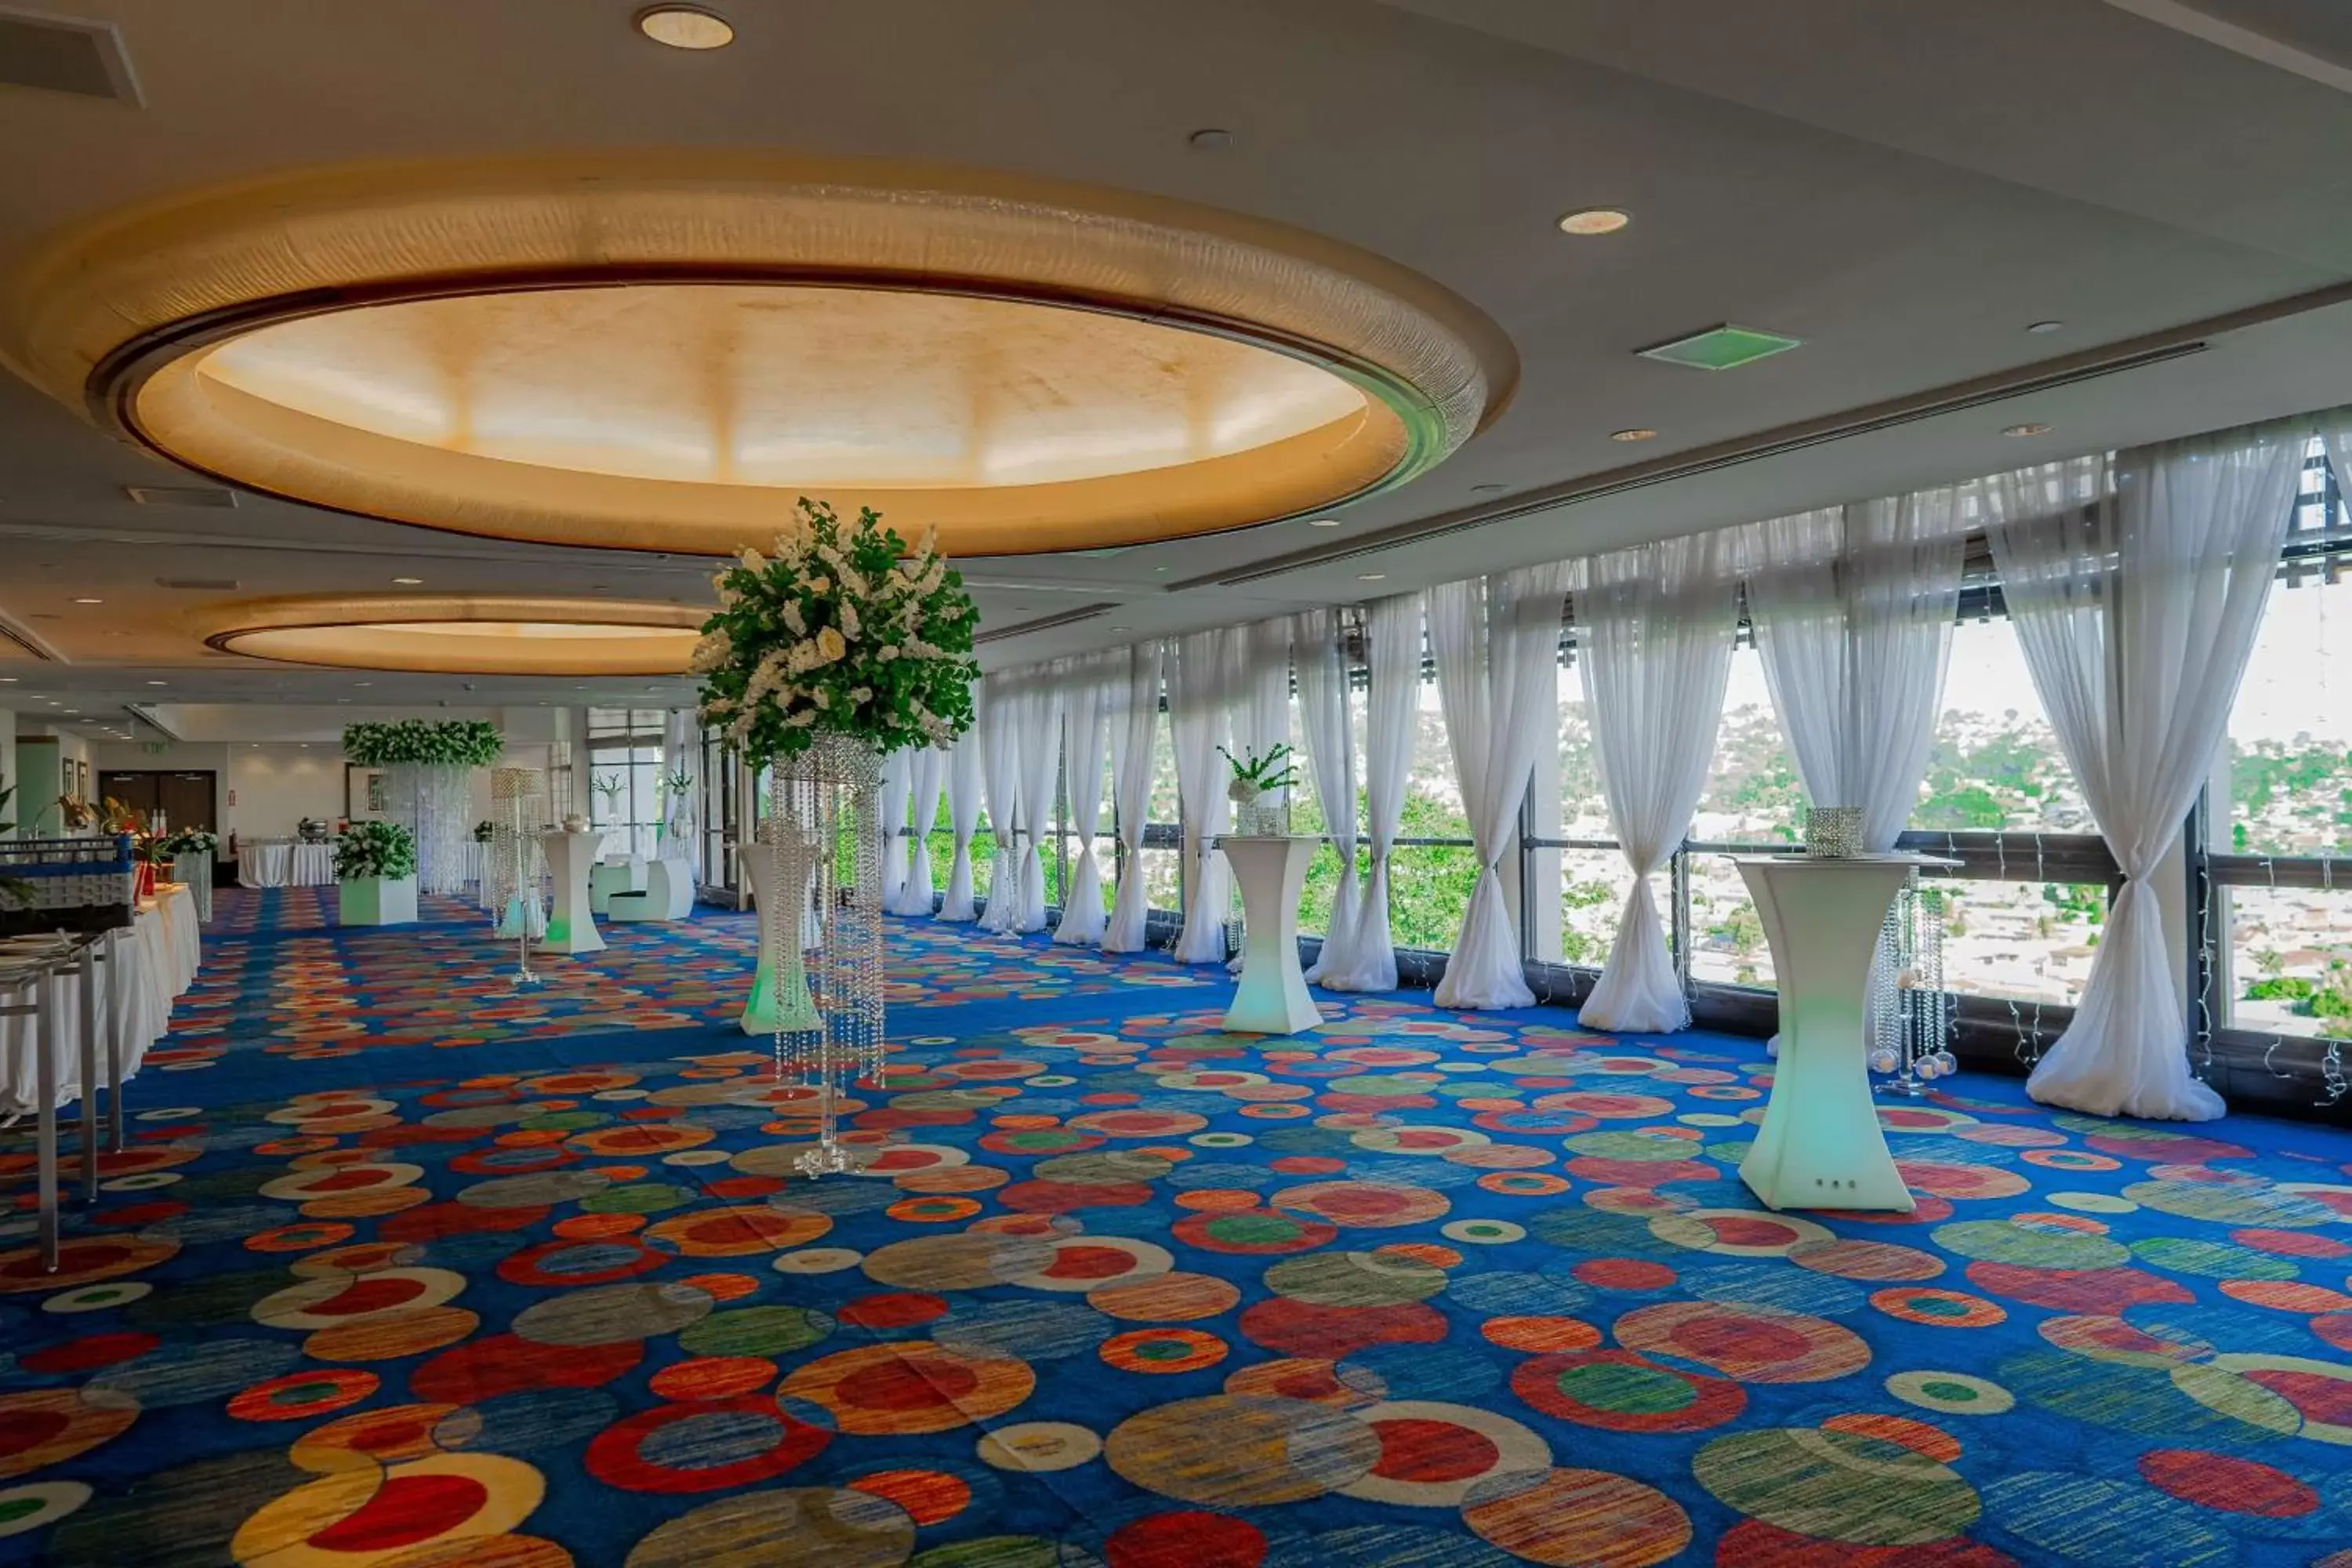 Meeting/conference room, Banquet Facilities in Hilton Trinidad & Conference Centre